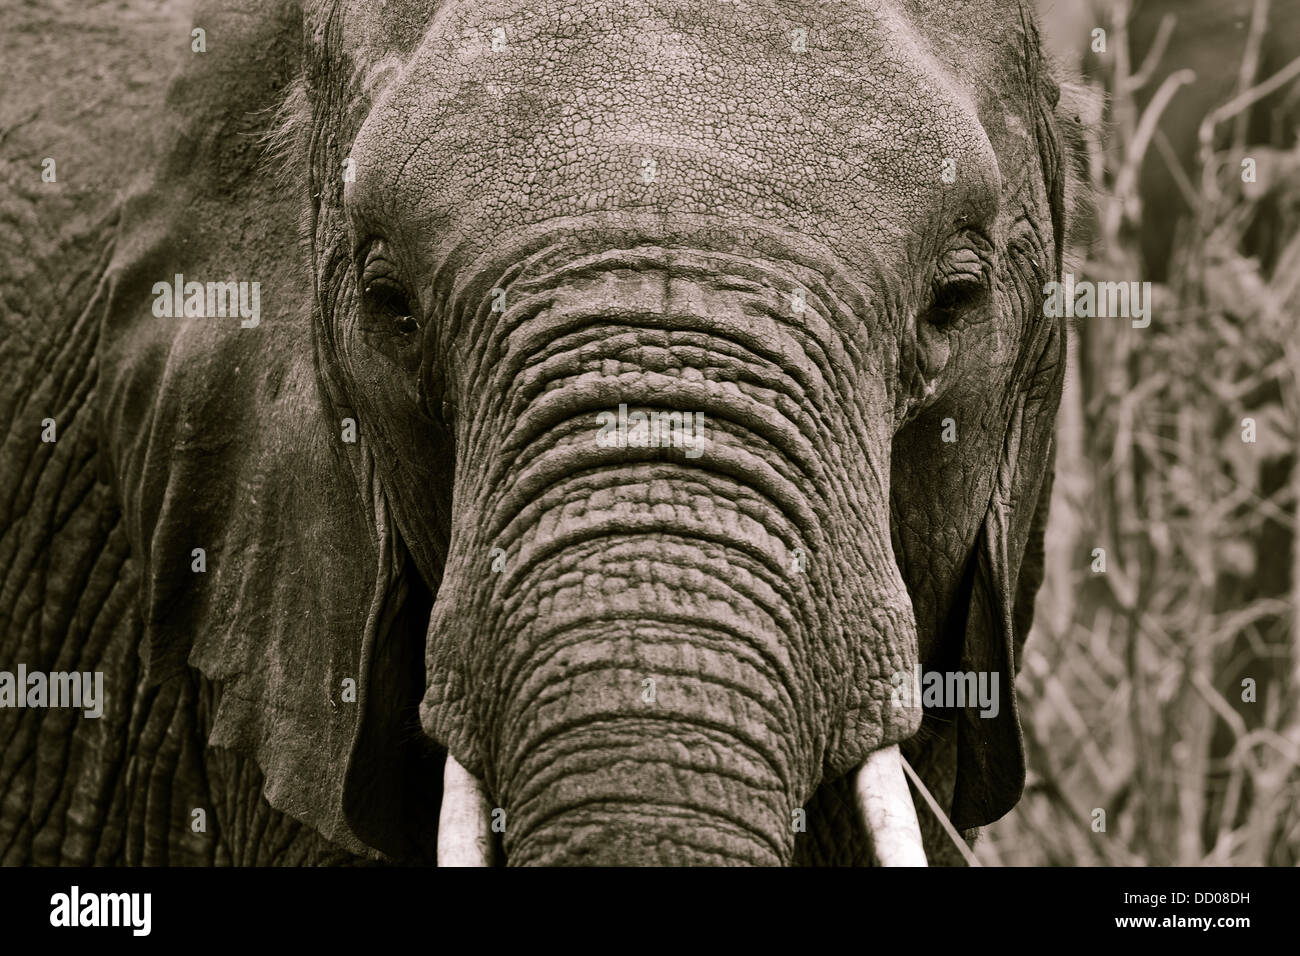 animals, Central, animal, Tarangire, Tanzania, Africa Stock Photo